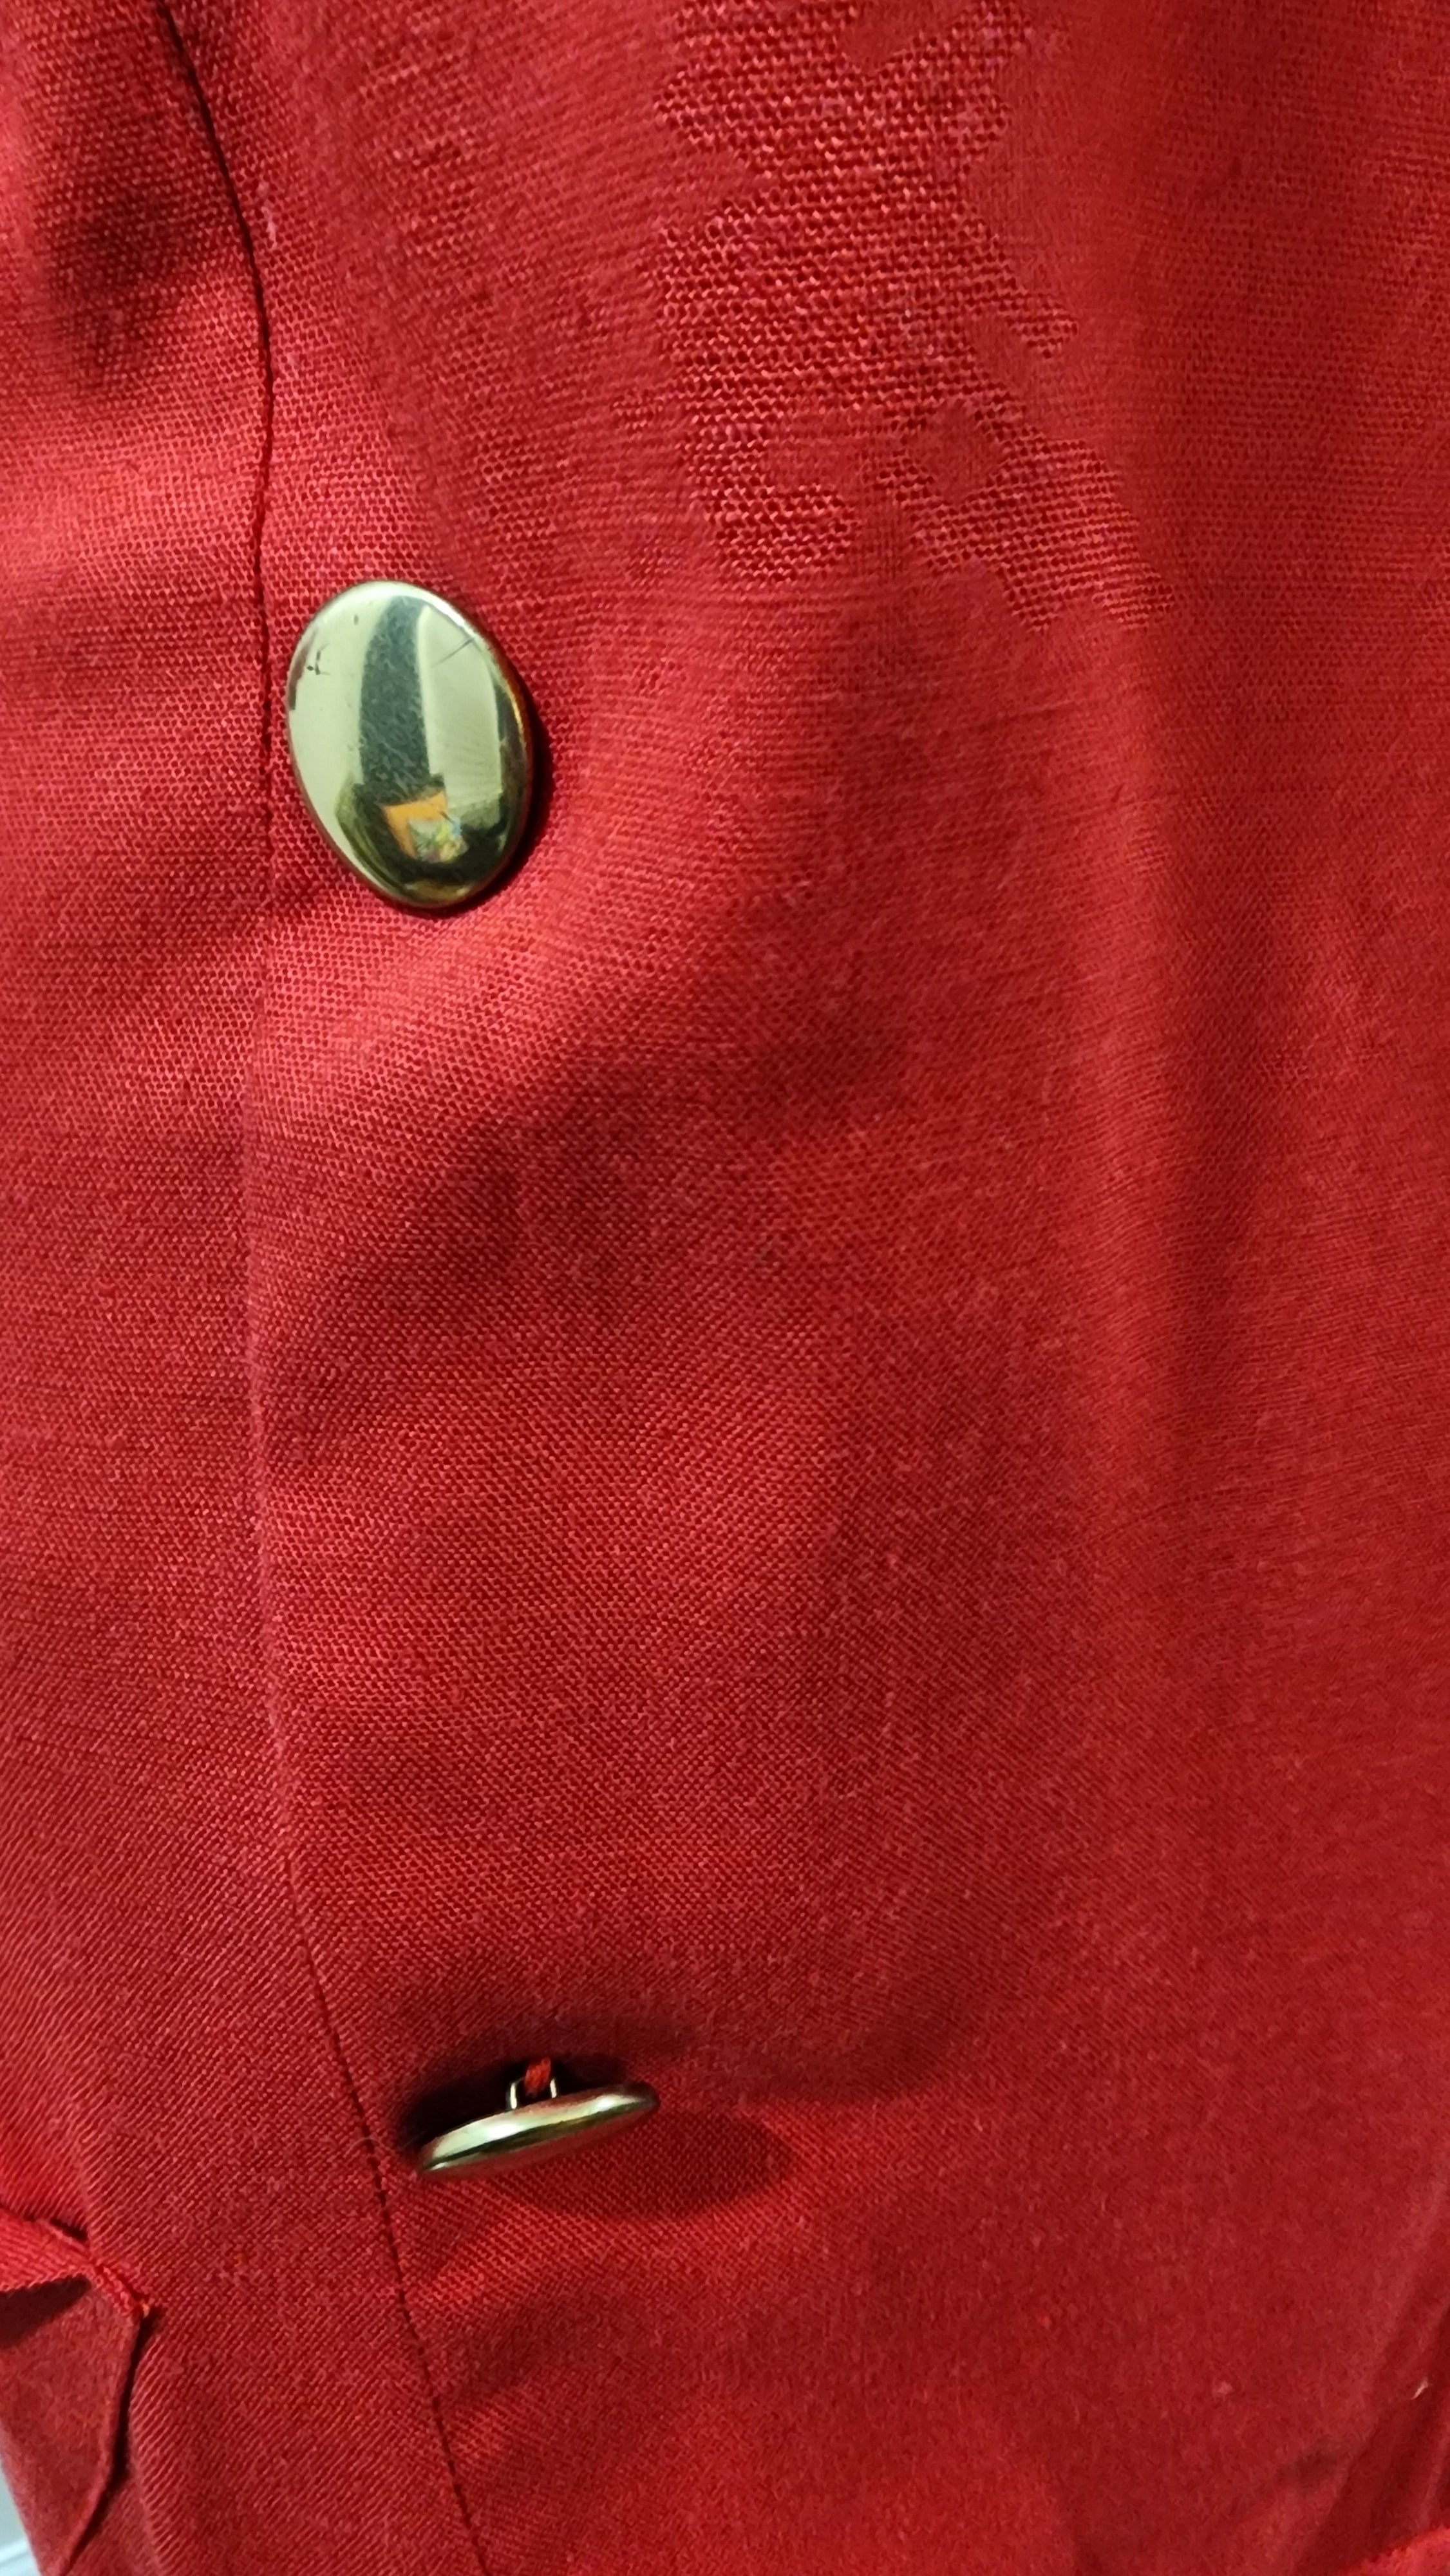 Vintage red half sleeve dress